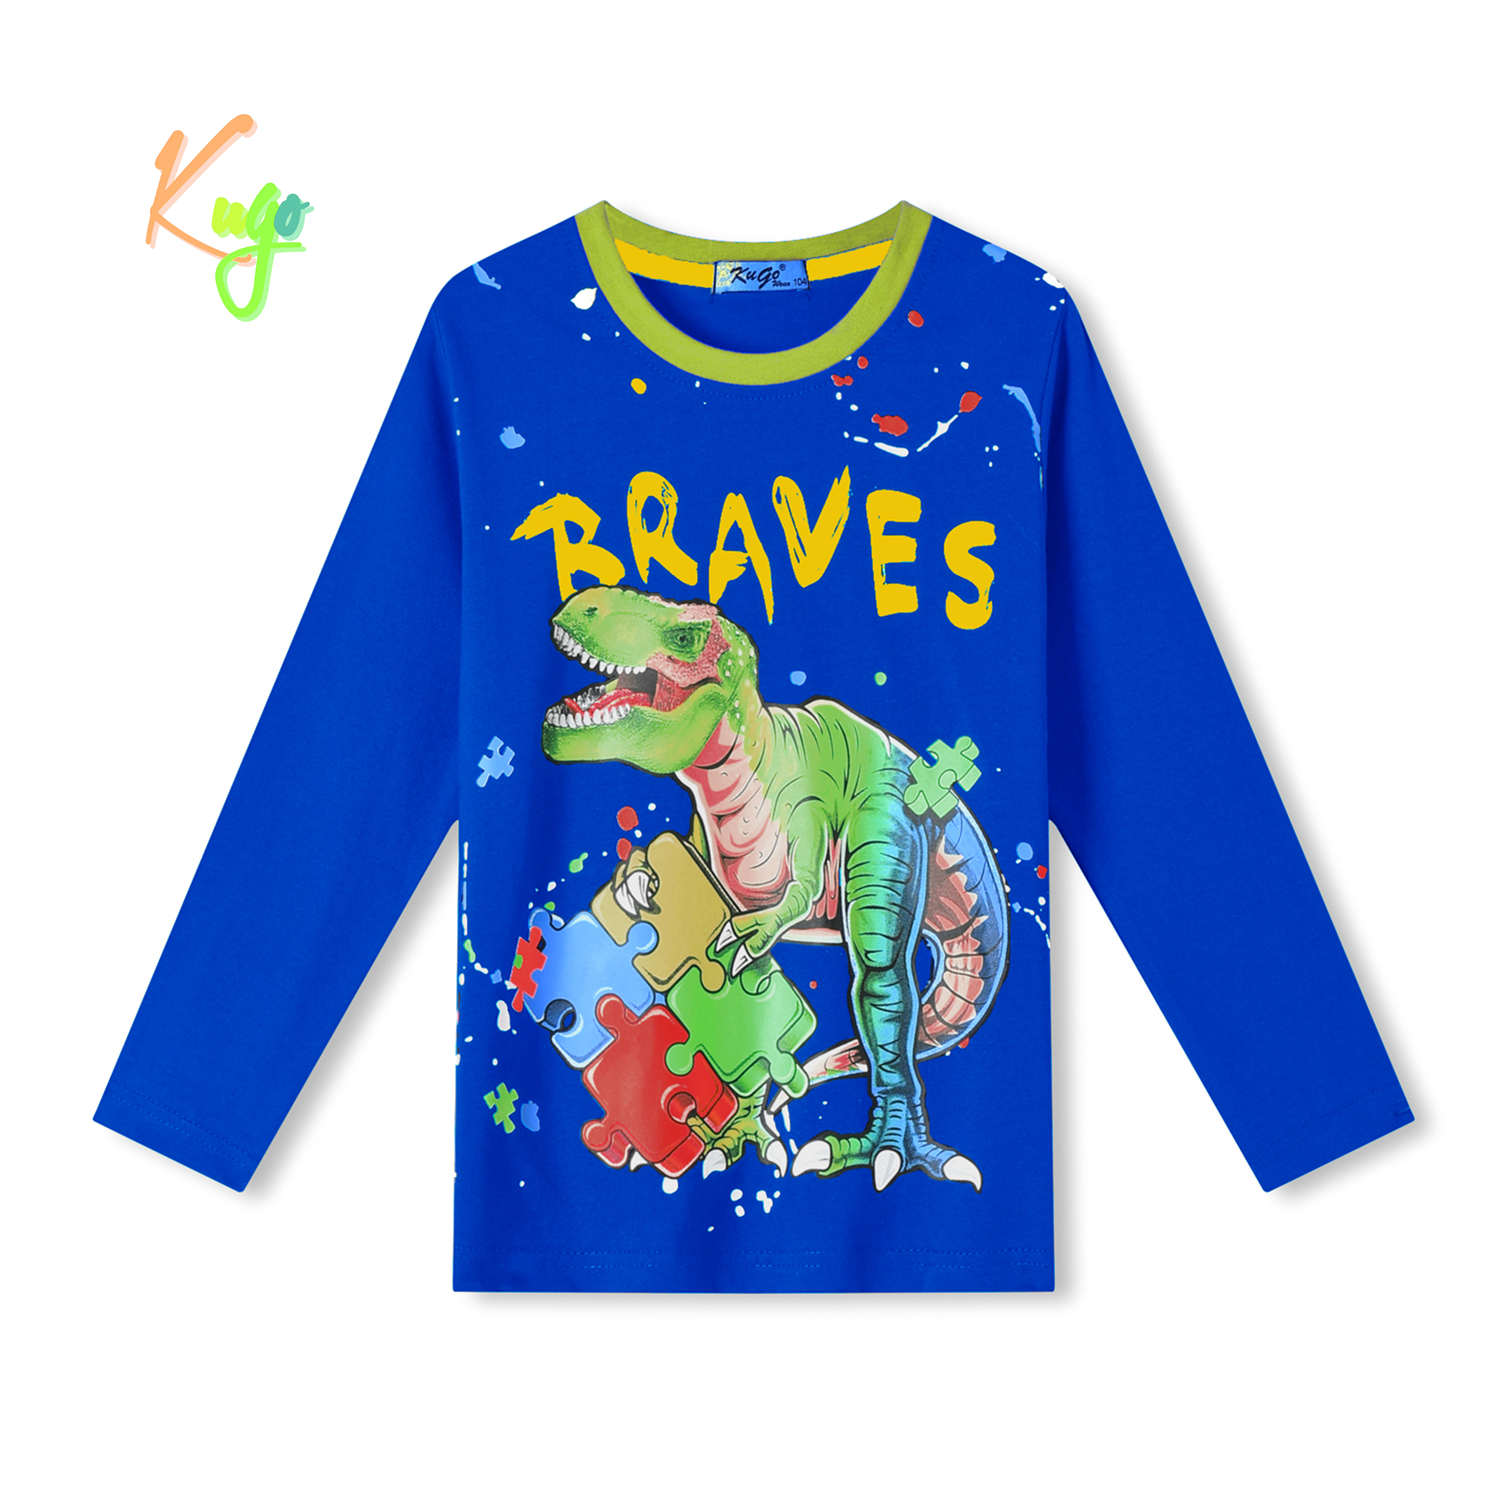 Chlapecké tričko - KUGO HC0756, modrá Barva: Modrá, Velikost: 98